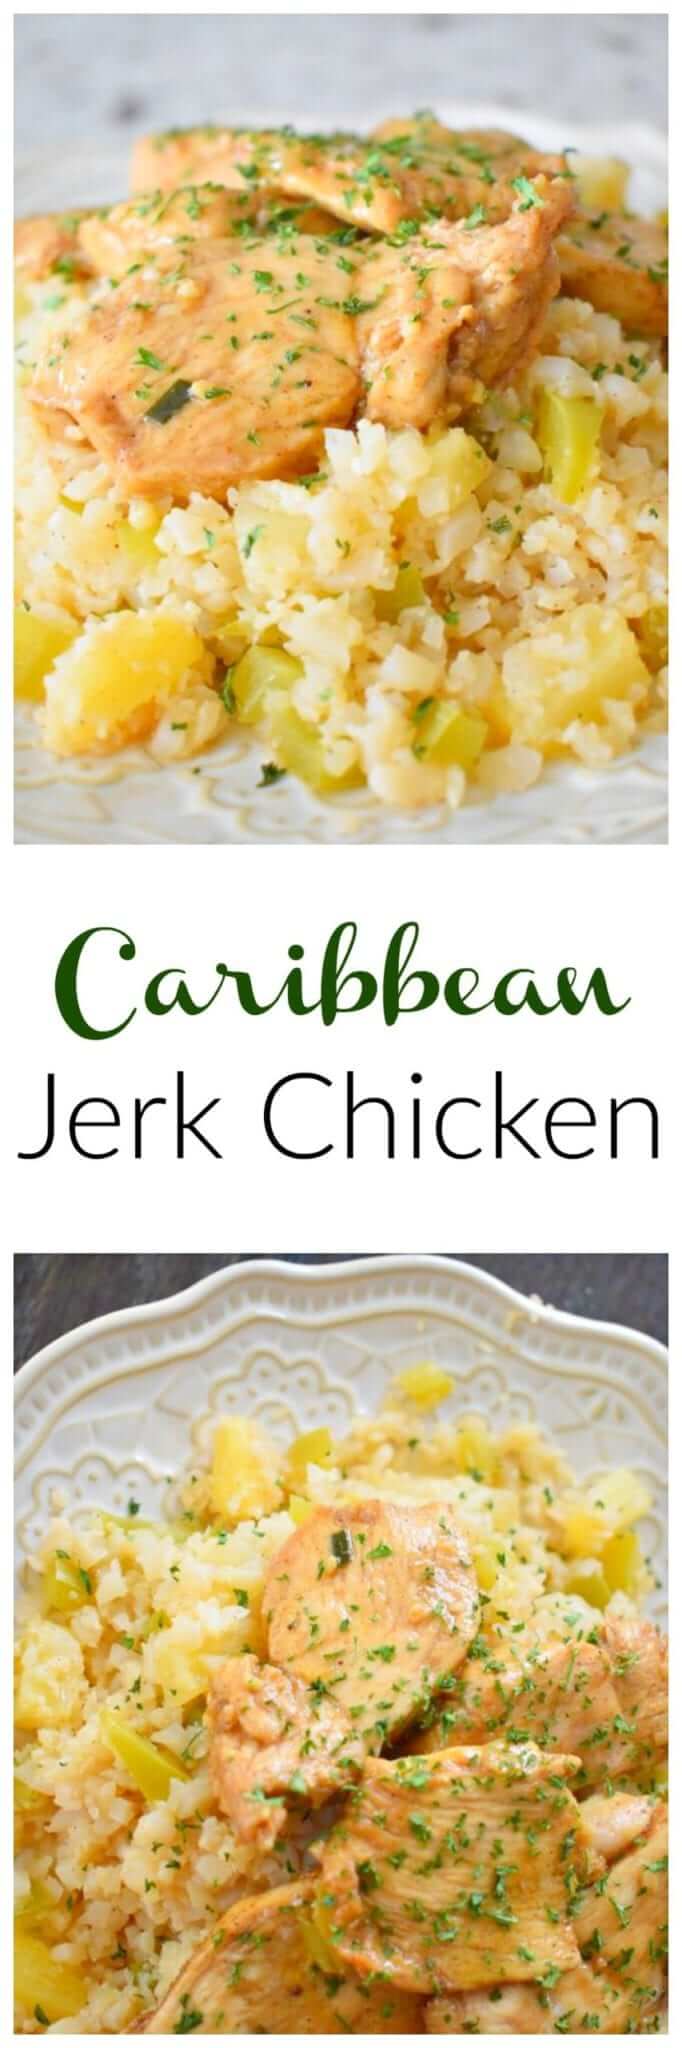 Caribbean Jerk Chicken and Cauliflower Rice